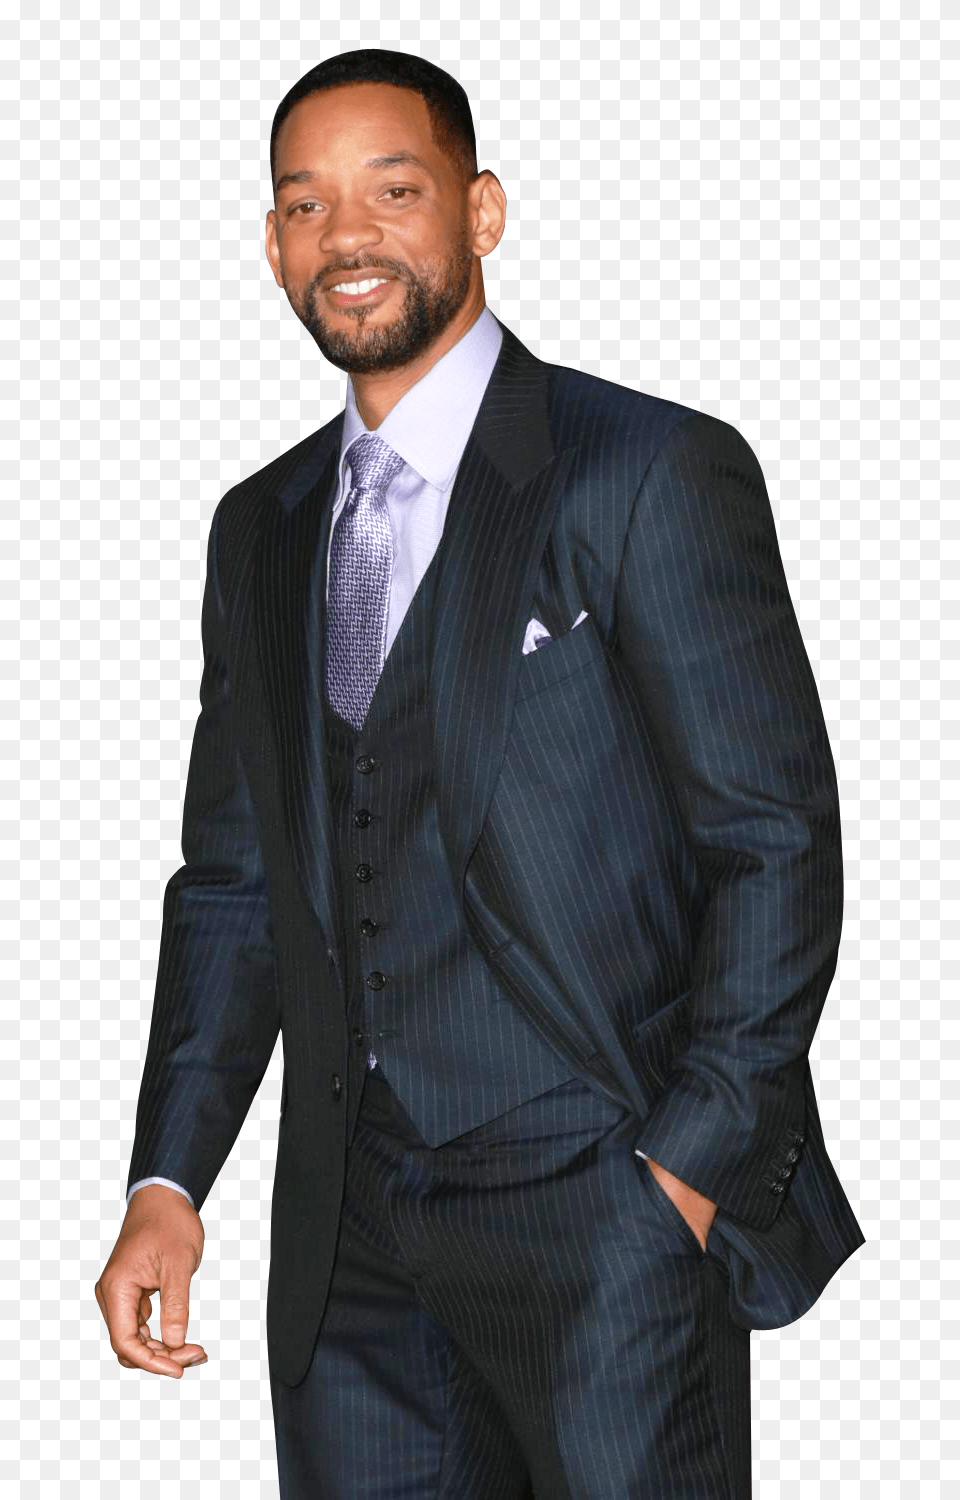 Pngpix Com Will Smith Transparent, Tuxedo, Blazer, Clothing, Coat Png Image